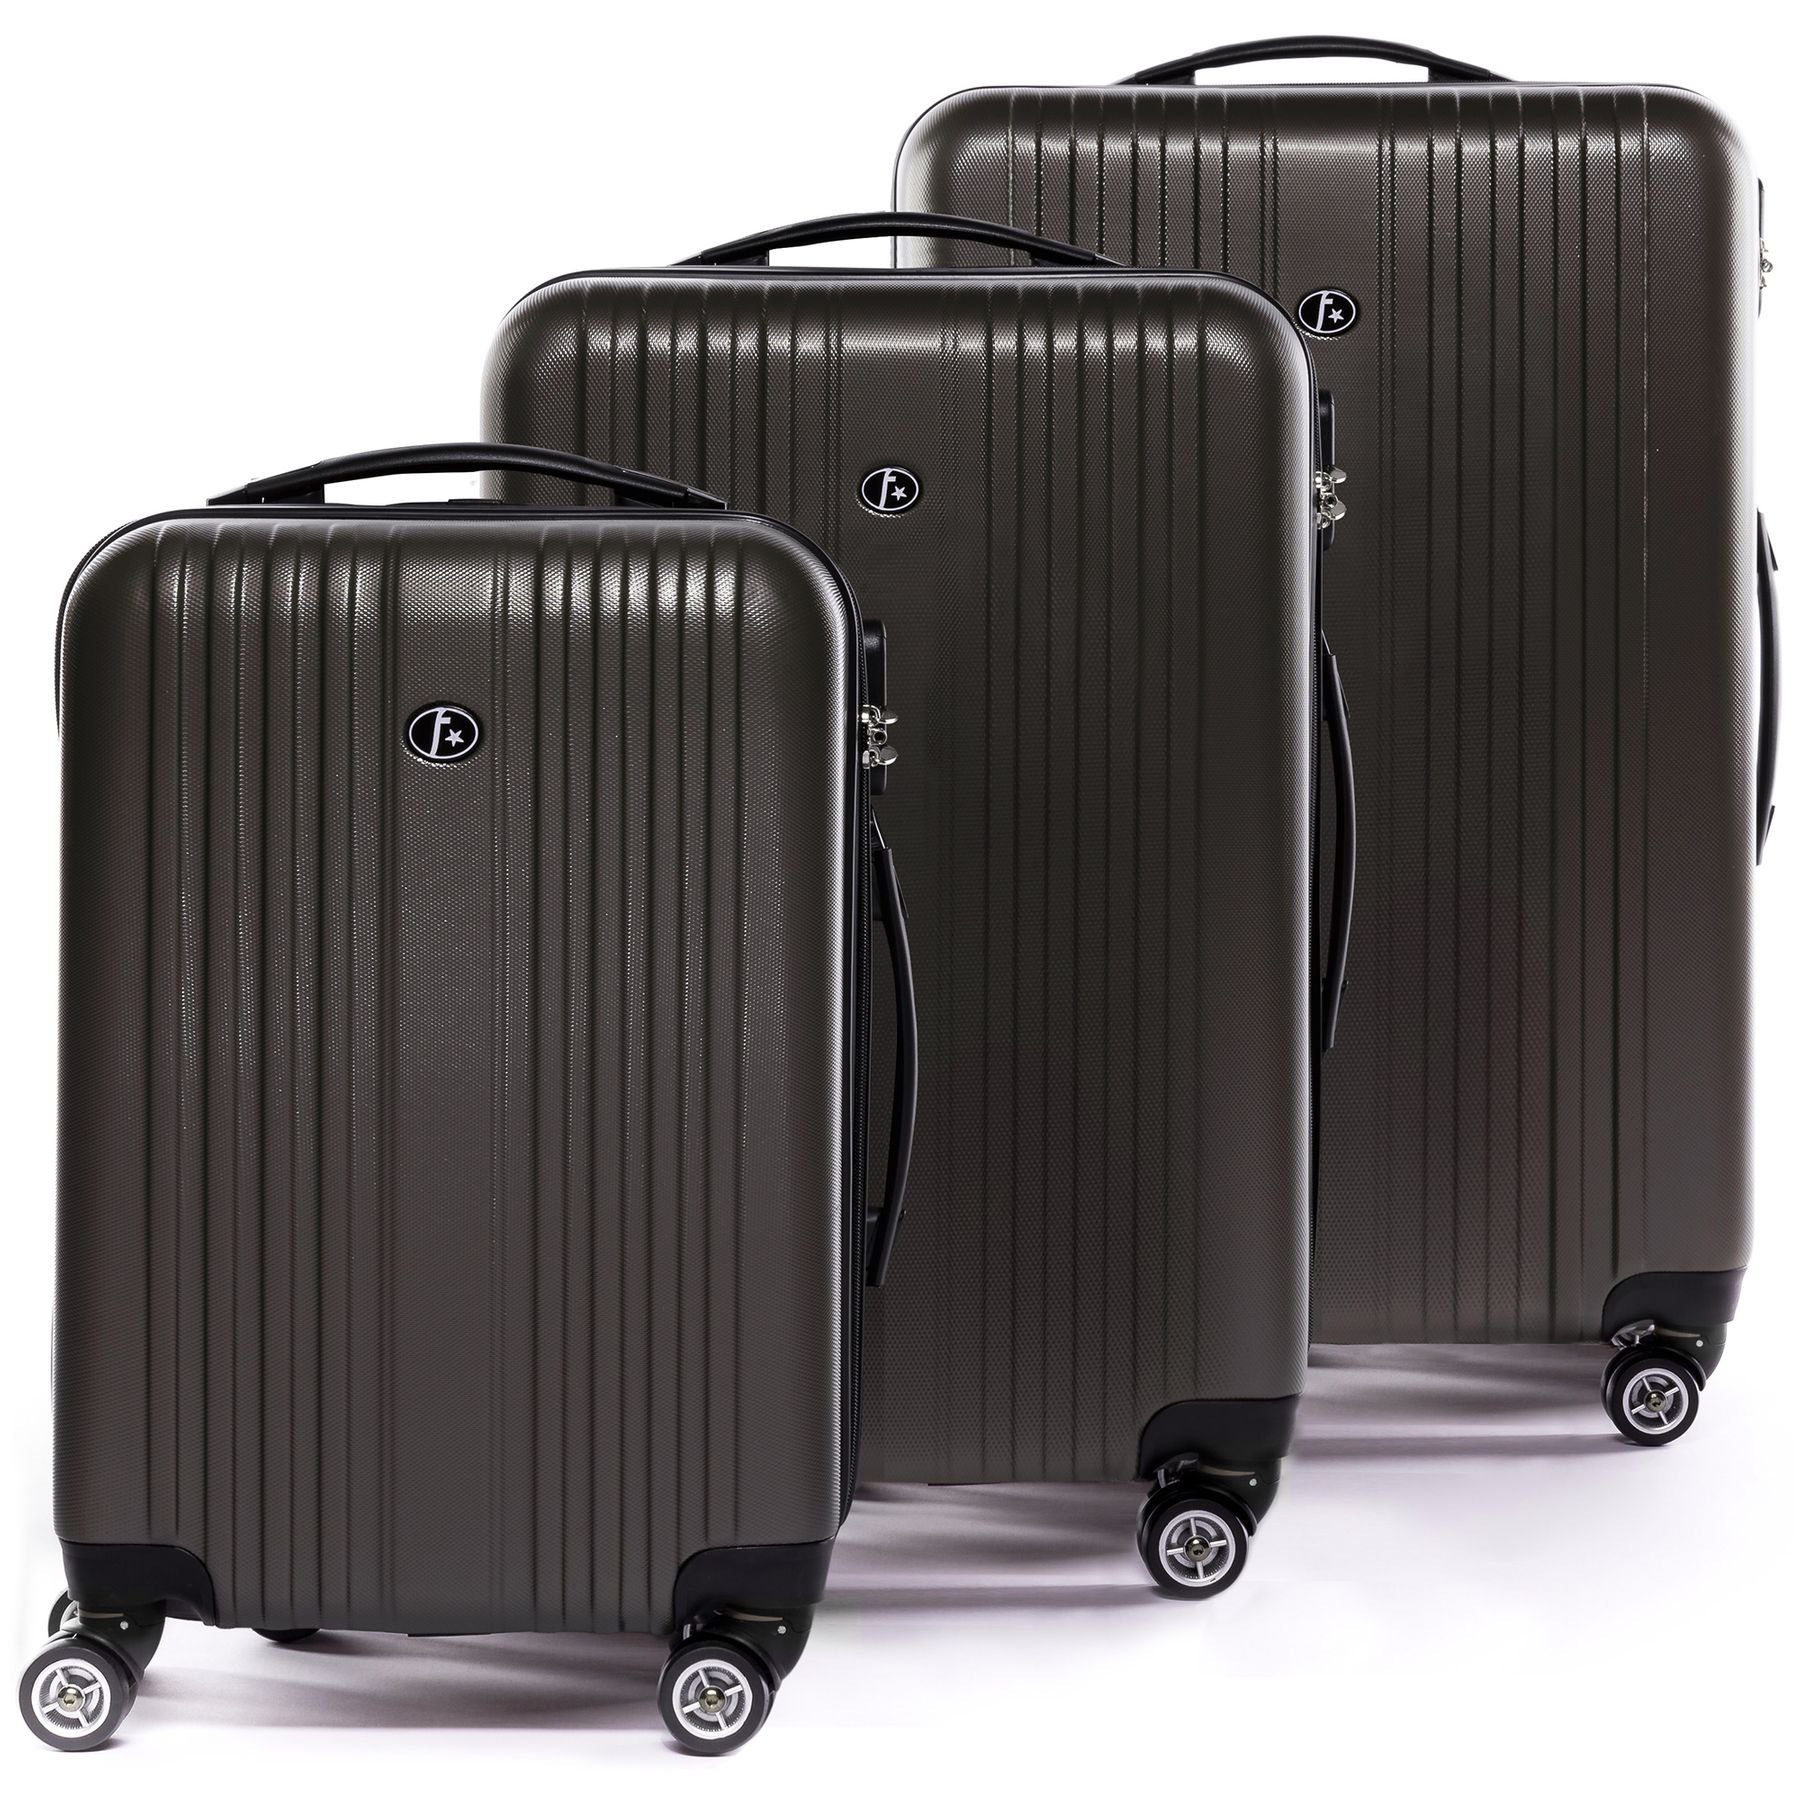 Koffer teilig 3er Trolley Set, 4 Toulouse, FERGÉ Rollkoffer 3 Kofferset Rollen, Hartschale Reisekoffer Premium